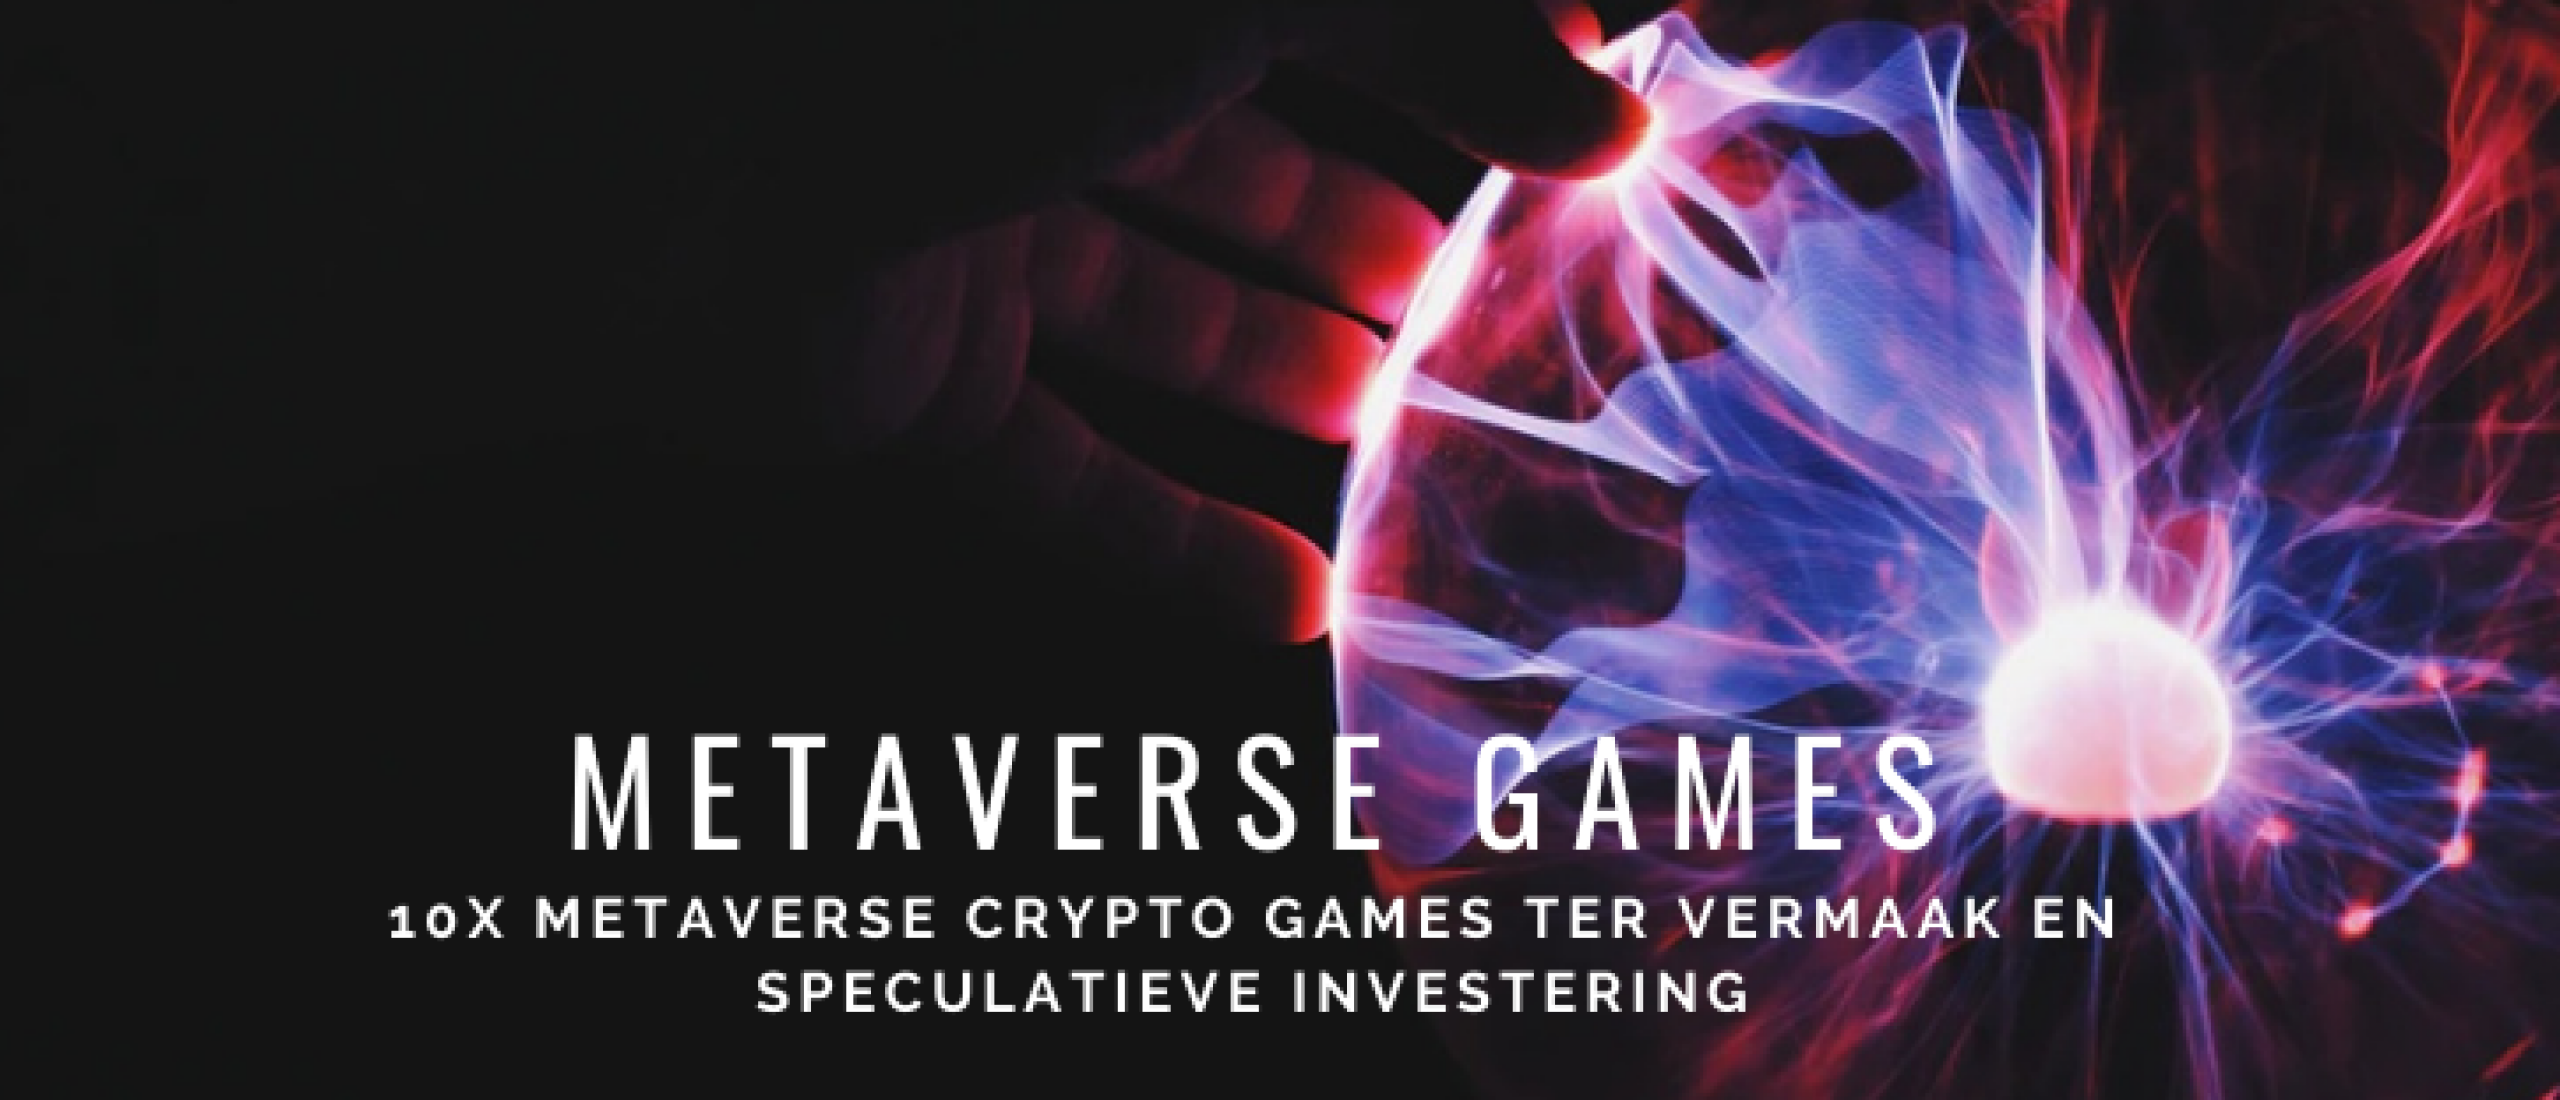 10x Metaverse Crypto Games: Speculatief Investeren en Plezier